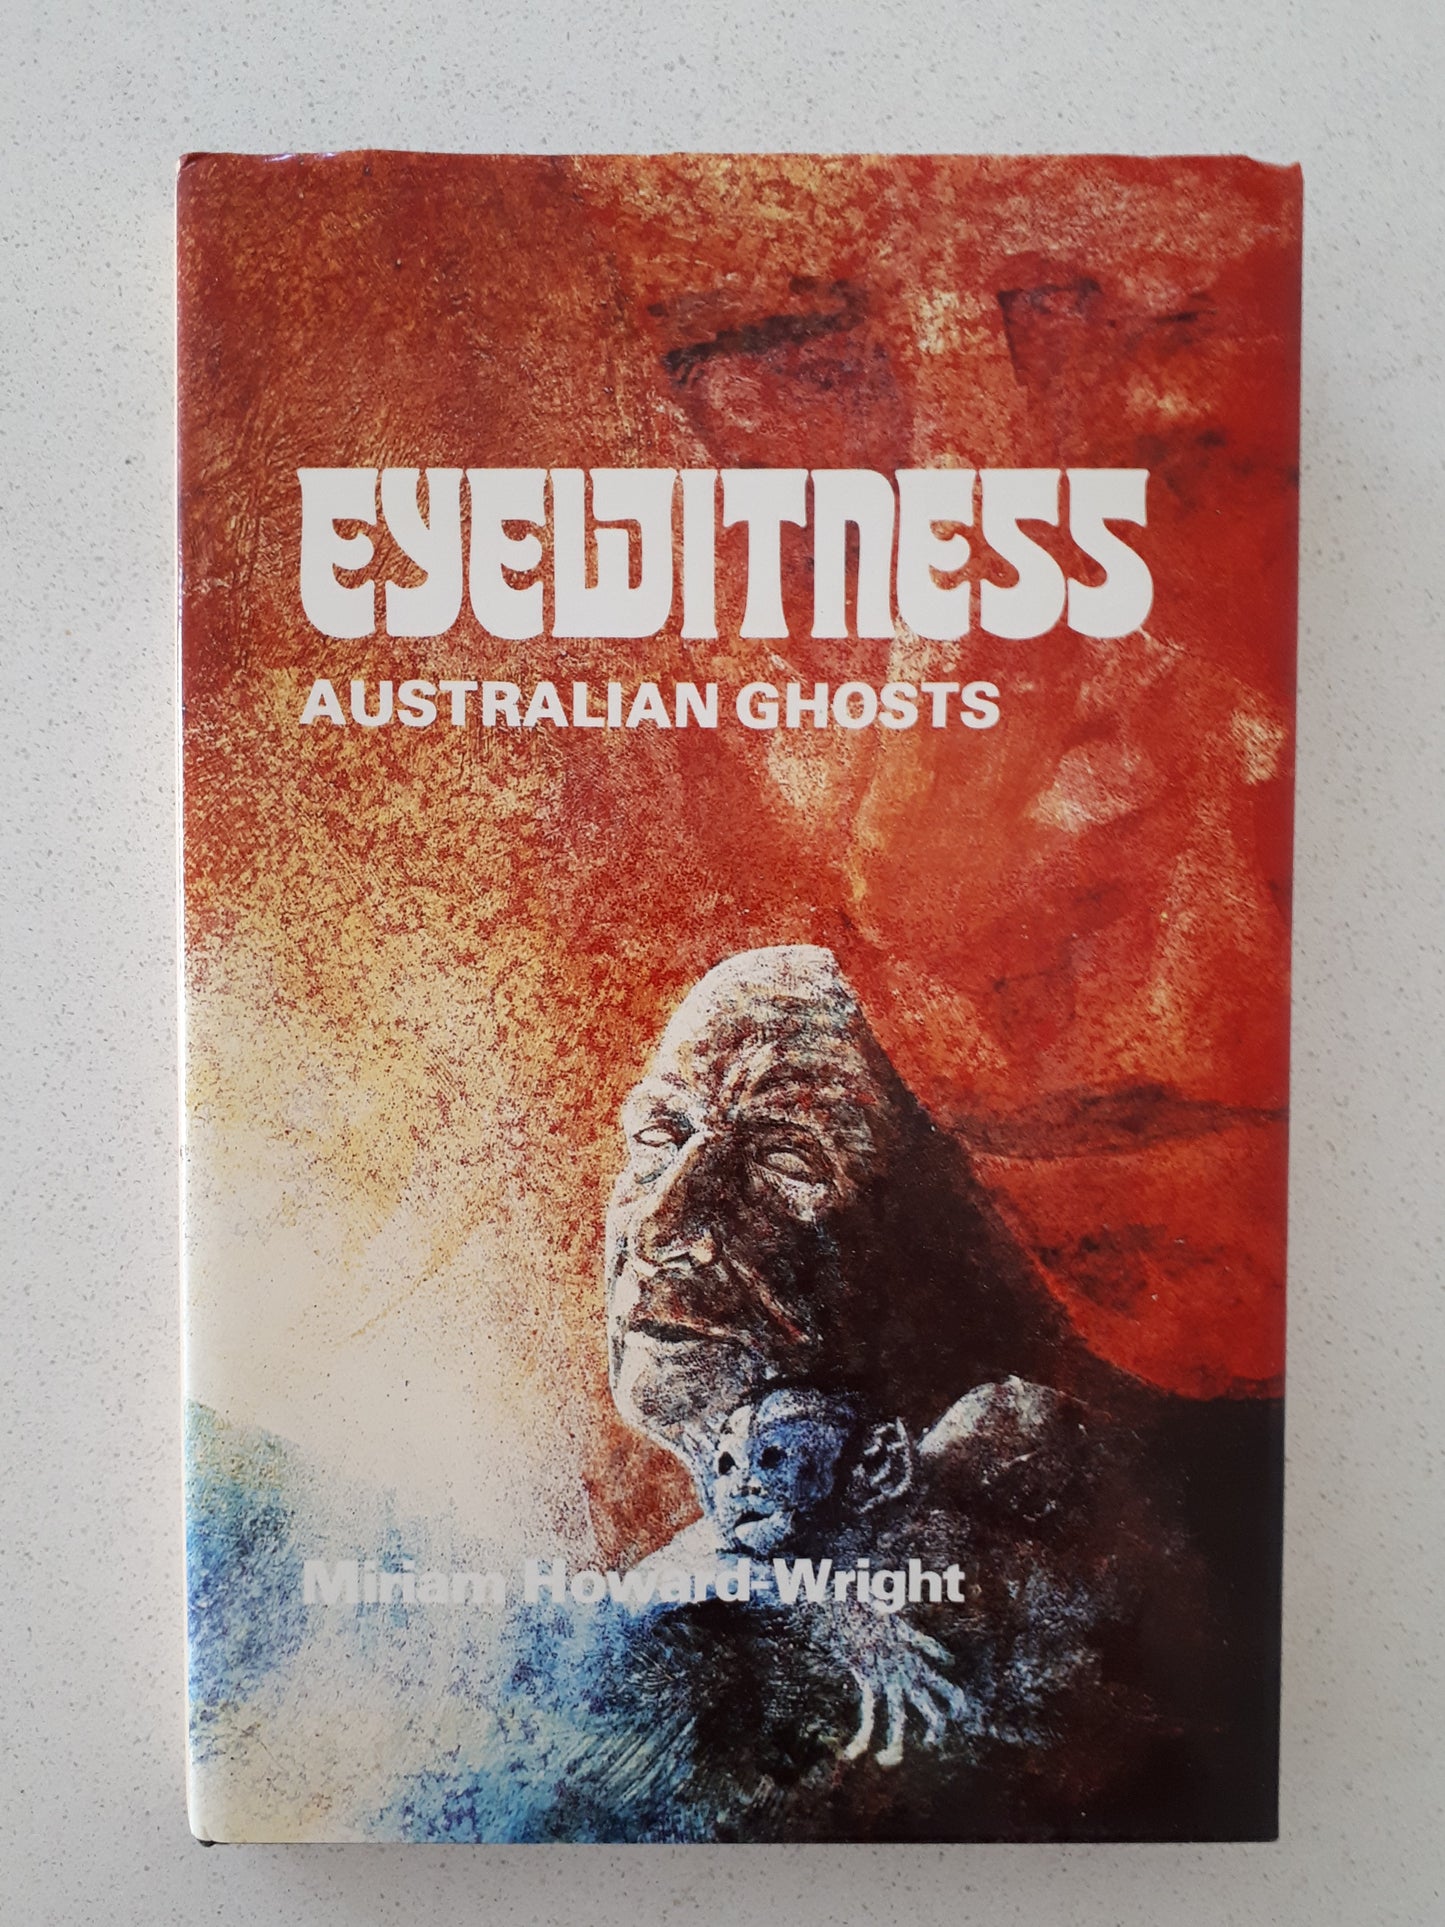 Eyewitness Australian Ghosts by Miriam Howard-Wright